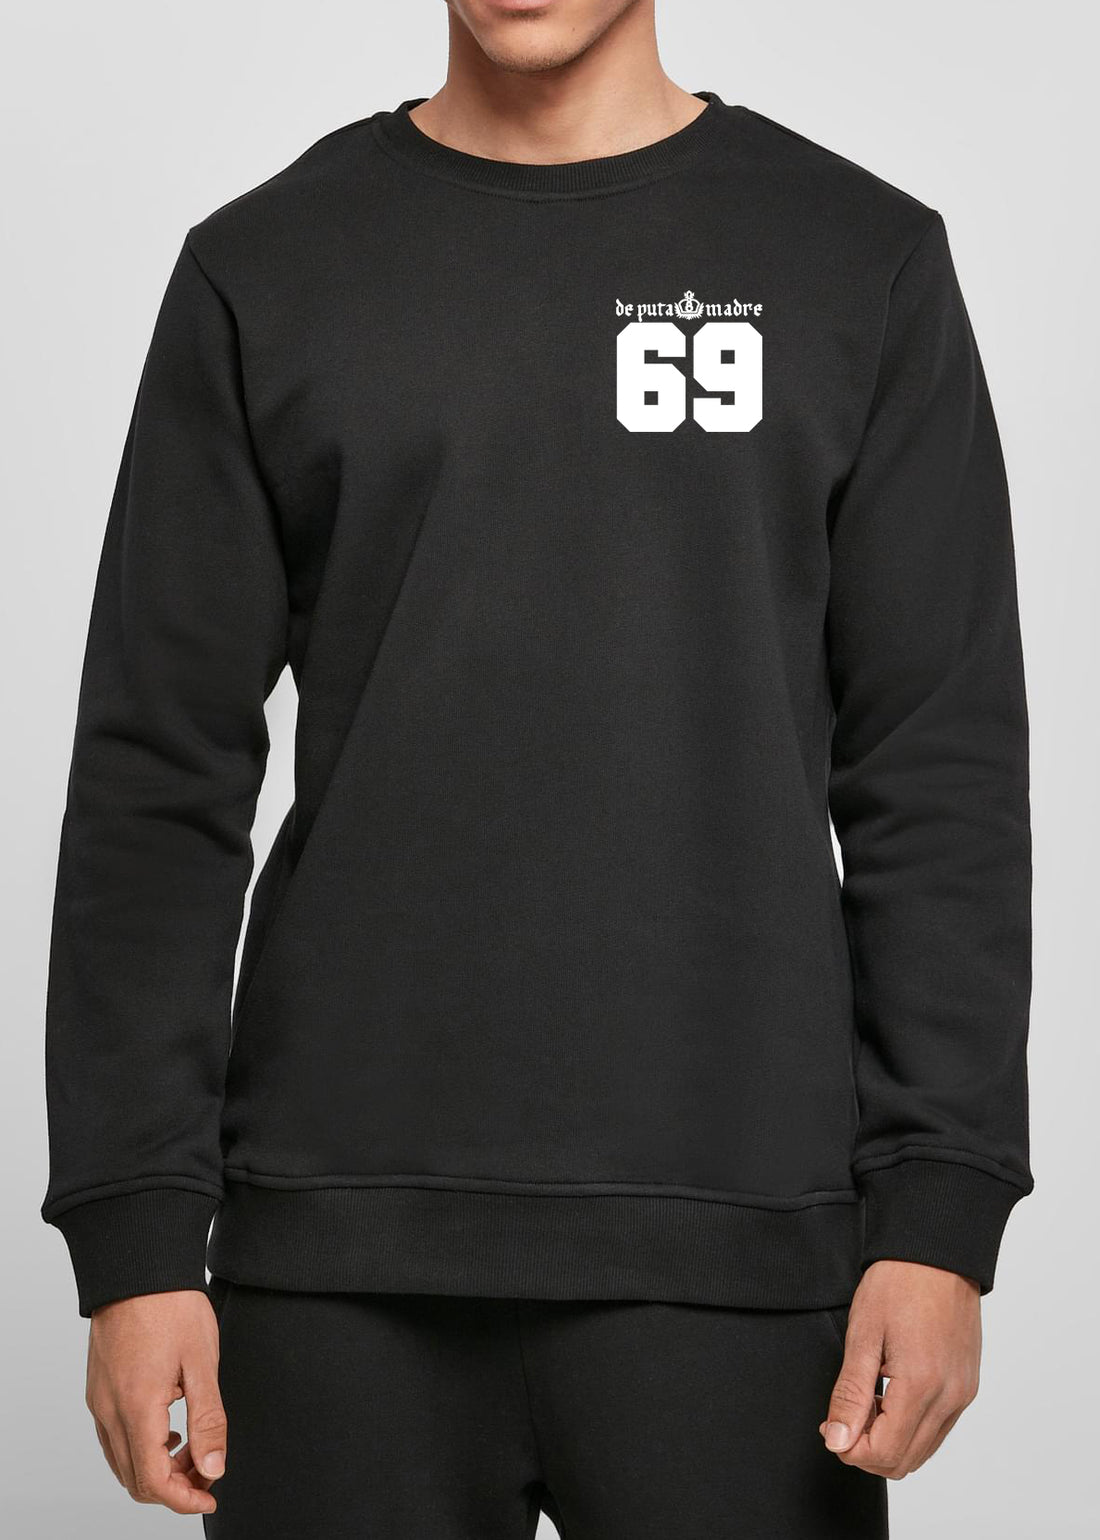 DPM 69 Men's sweatshirt design  Legendas